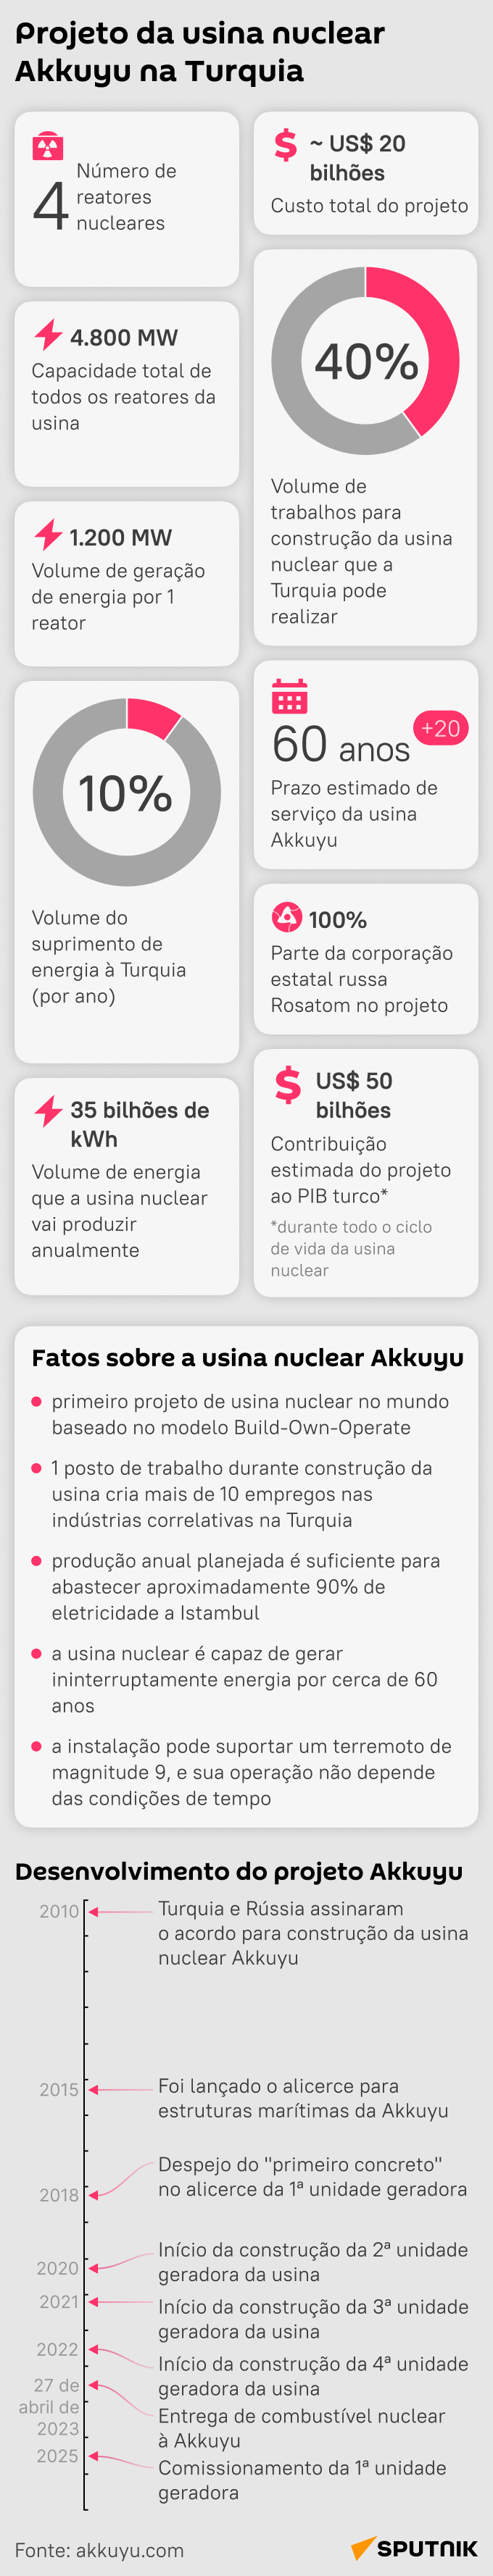 Conheça o projeto da usina Akkuyu, 1ª usina nuclear da Turquia - Sputnik Brasil